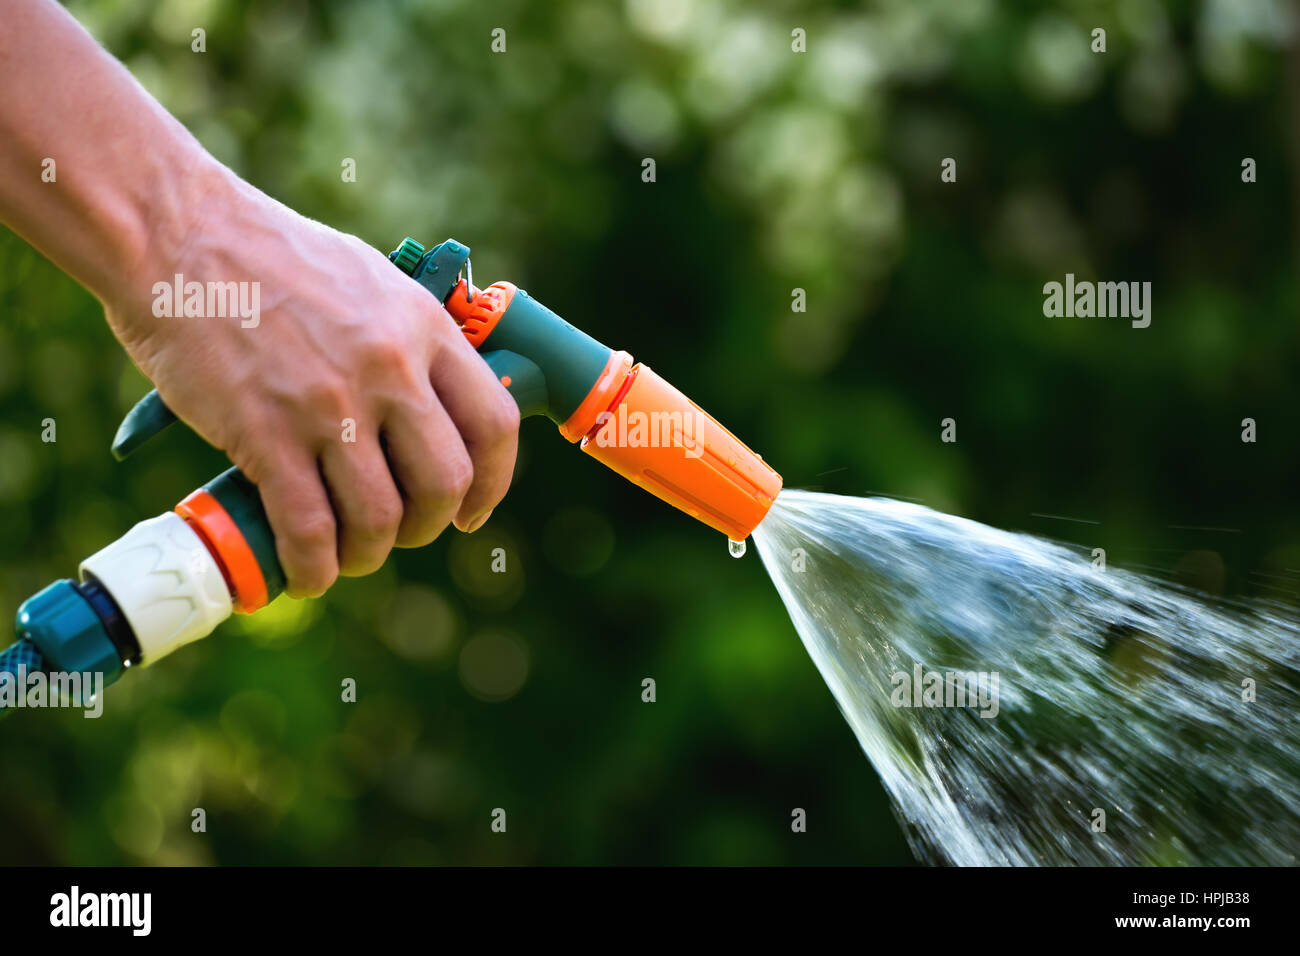 Gun water hose nozzle sprayer. Woman hand holding  hose sprayer head watering garden. Shallow depth of field Stock Photo